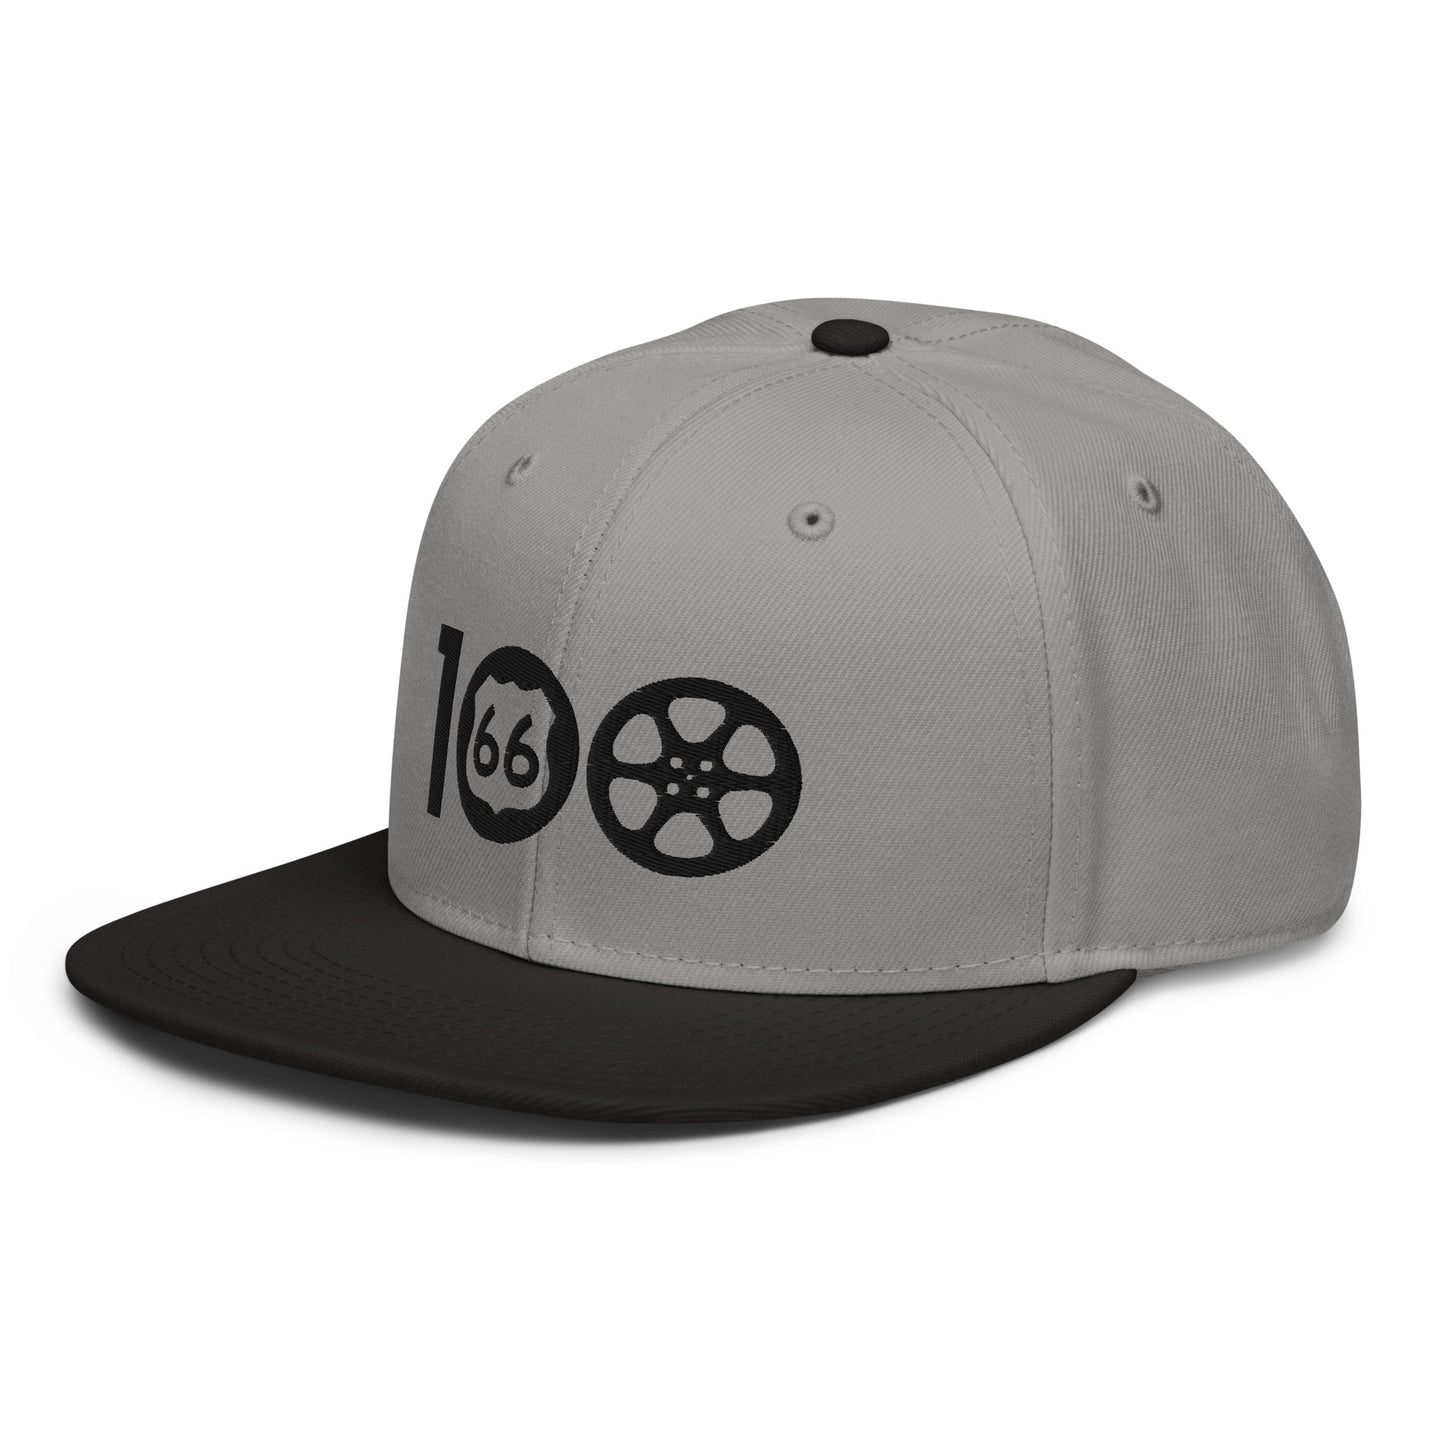 Route 66 Film Crew Hat - MInimalist Black logo on Silver Hat